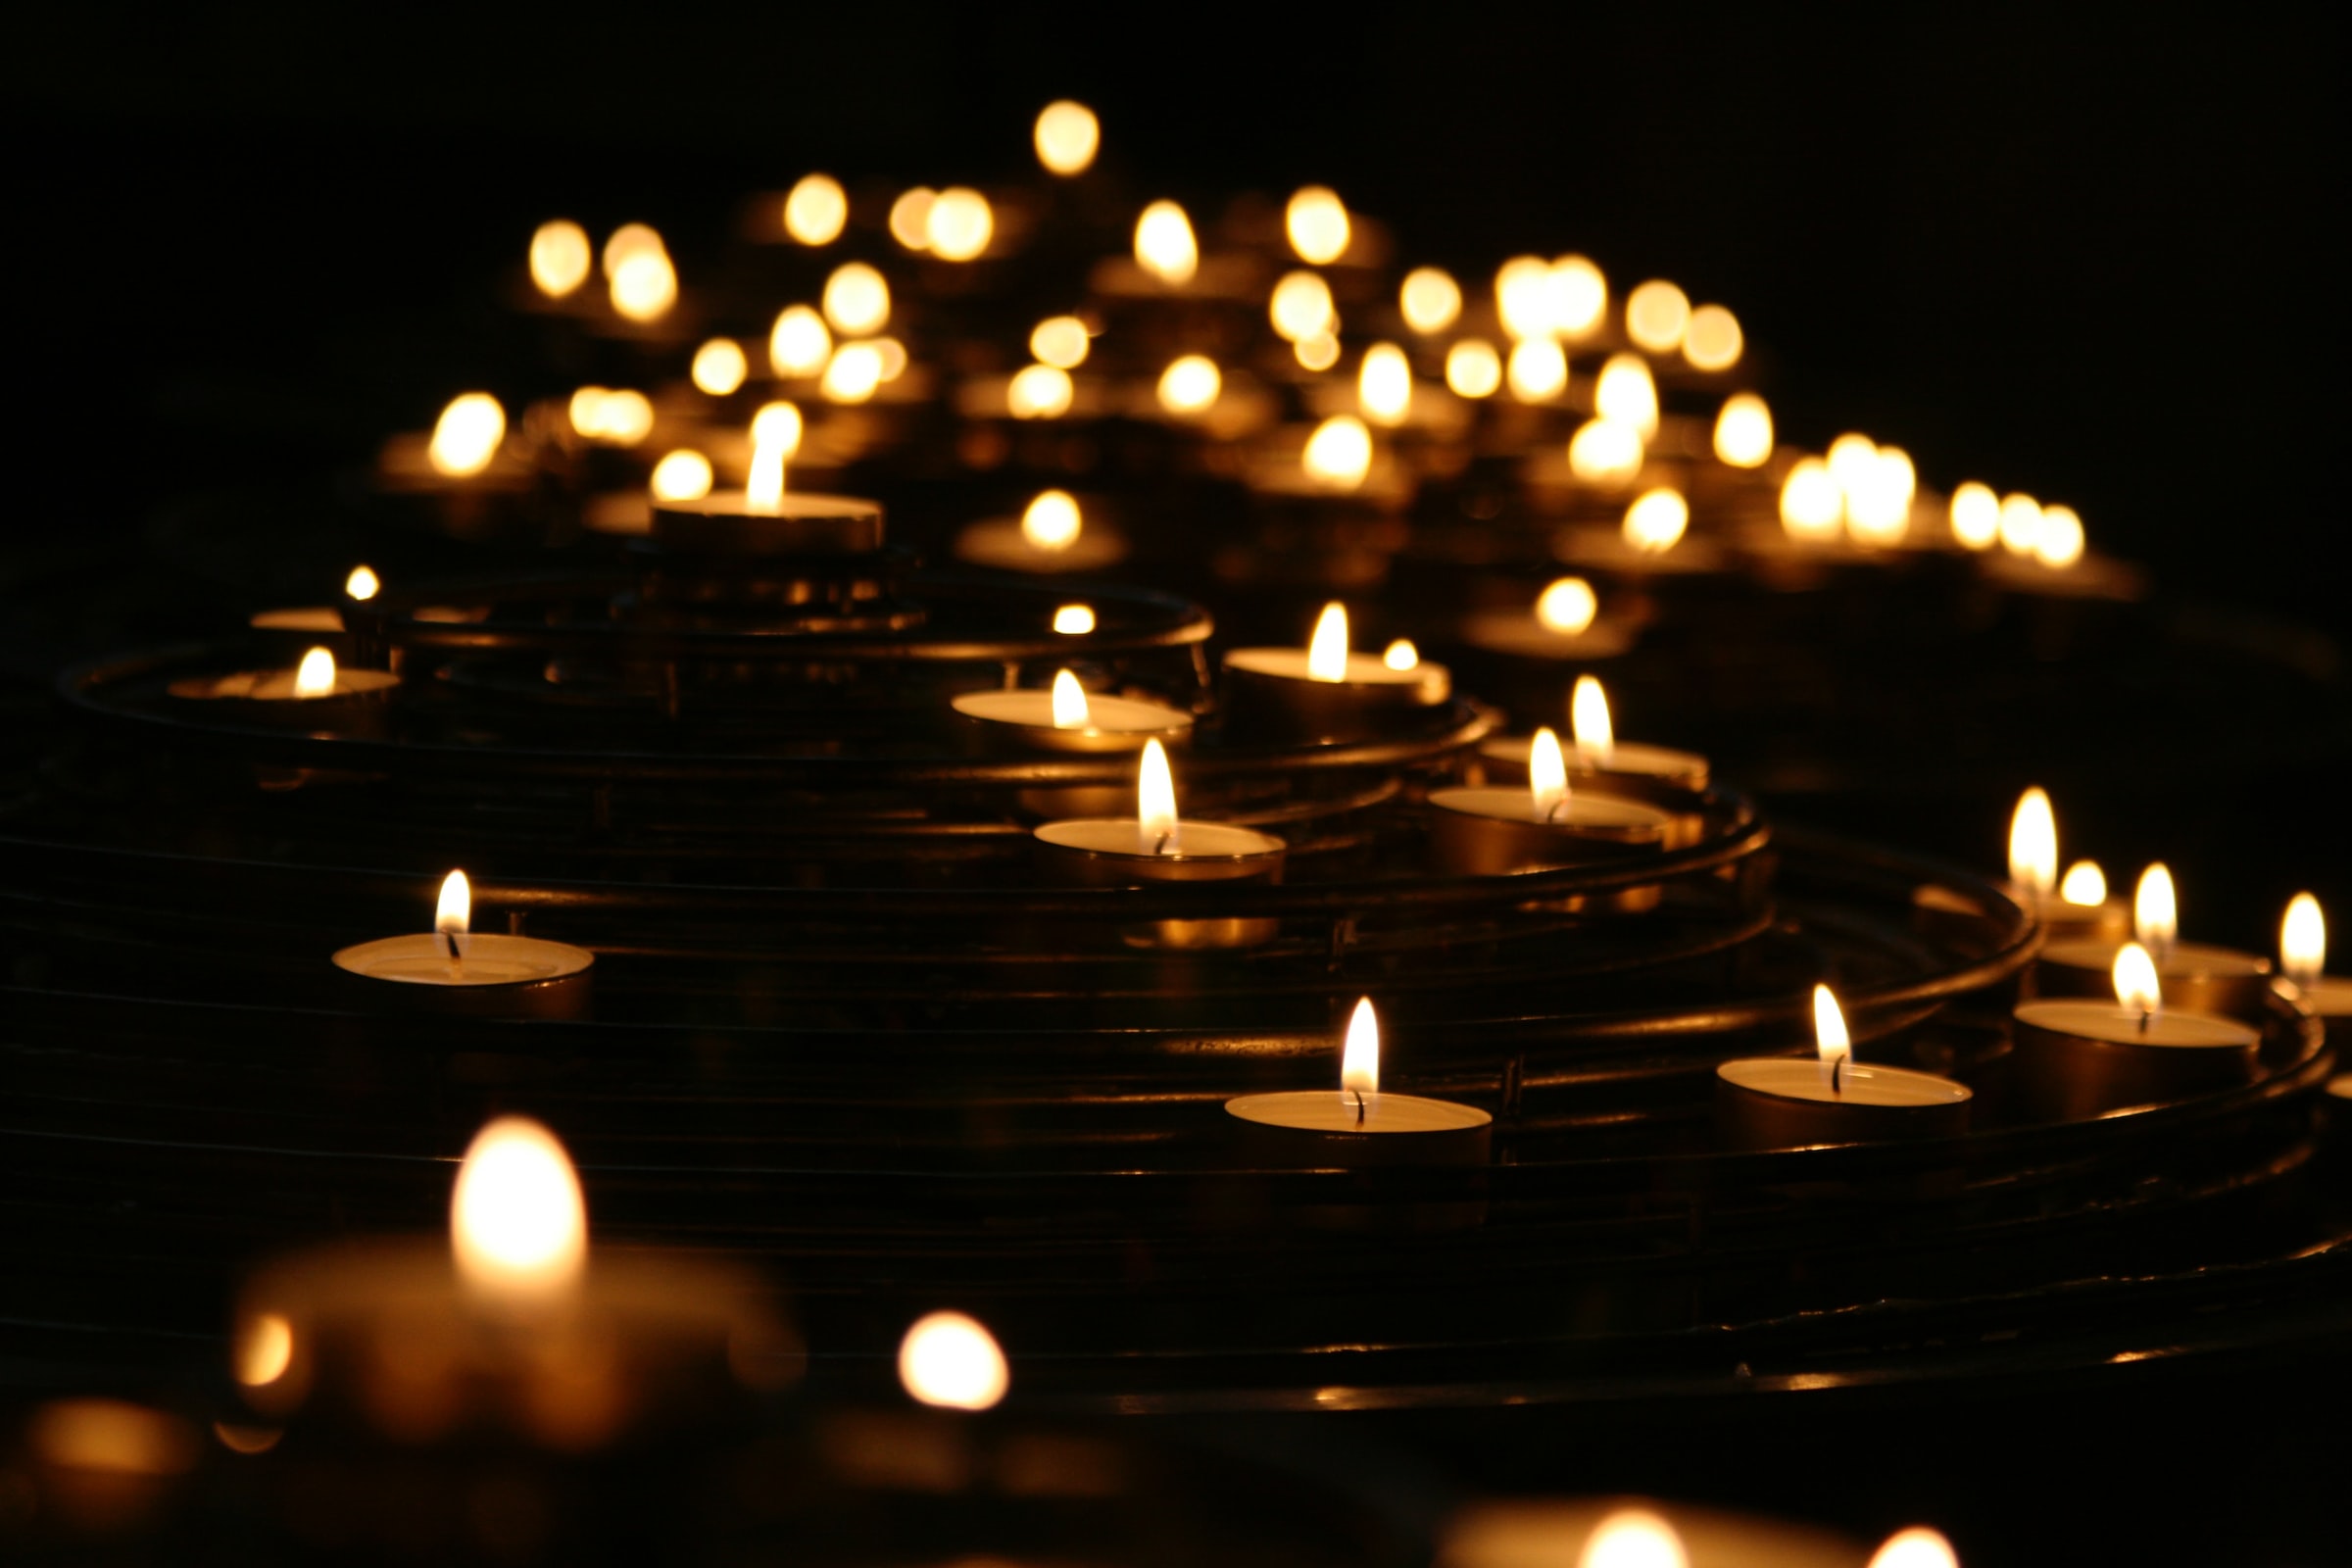 Several lit candles against a dark, black background.